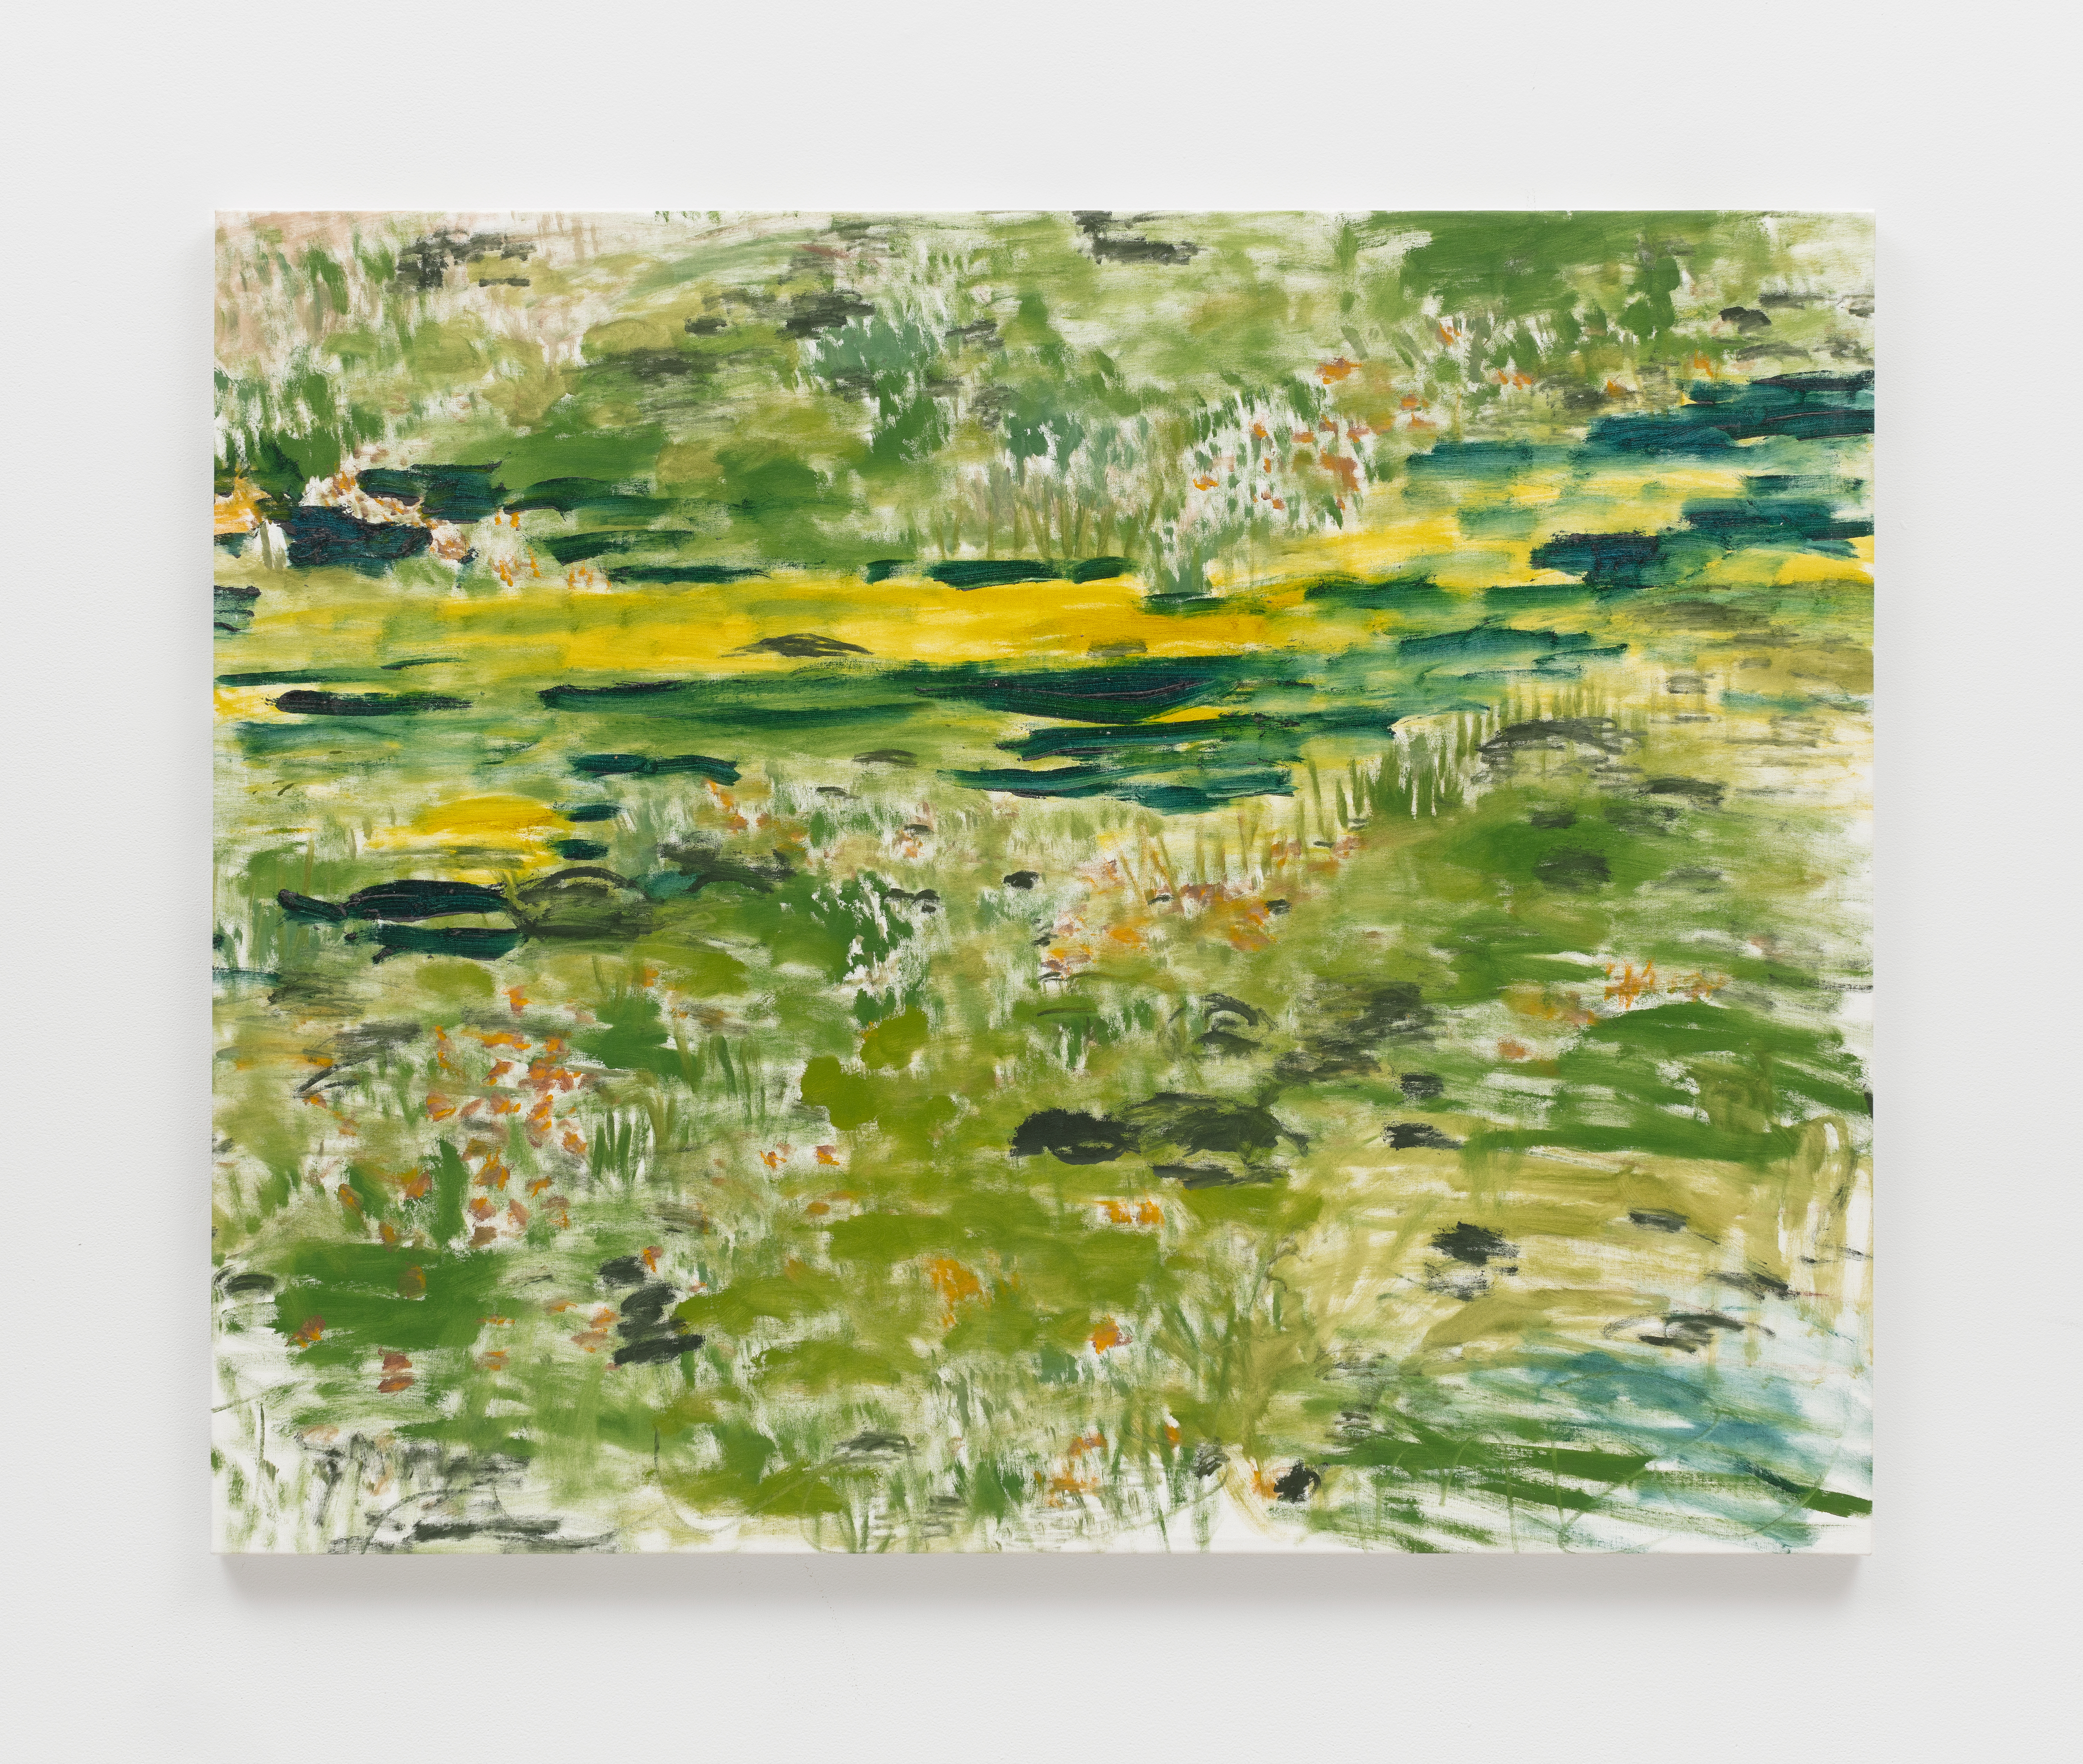 Trevor Shimizu
Moss Garden, 2019
Oil on canvas
40 x 49 inches
101.6 x 124.5 cm